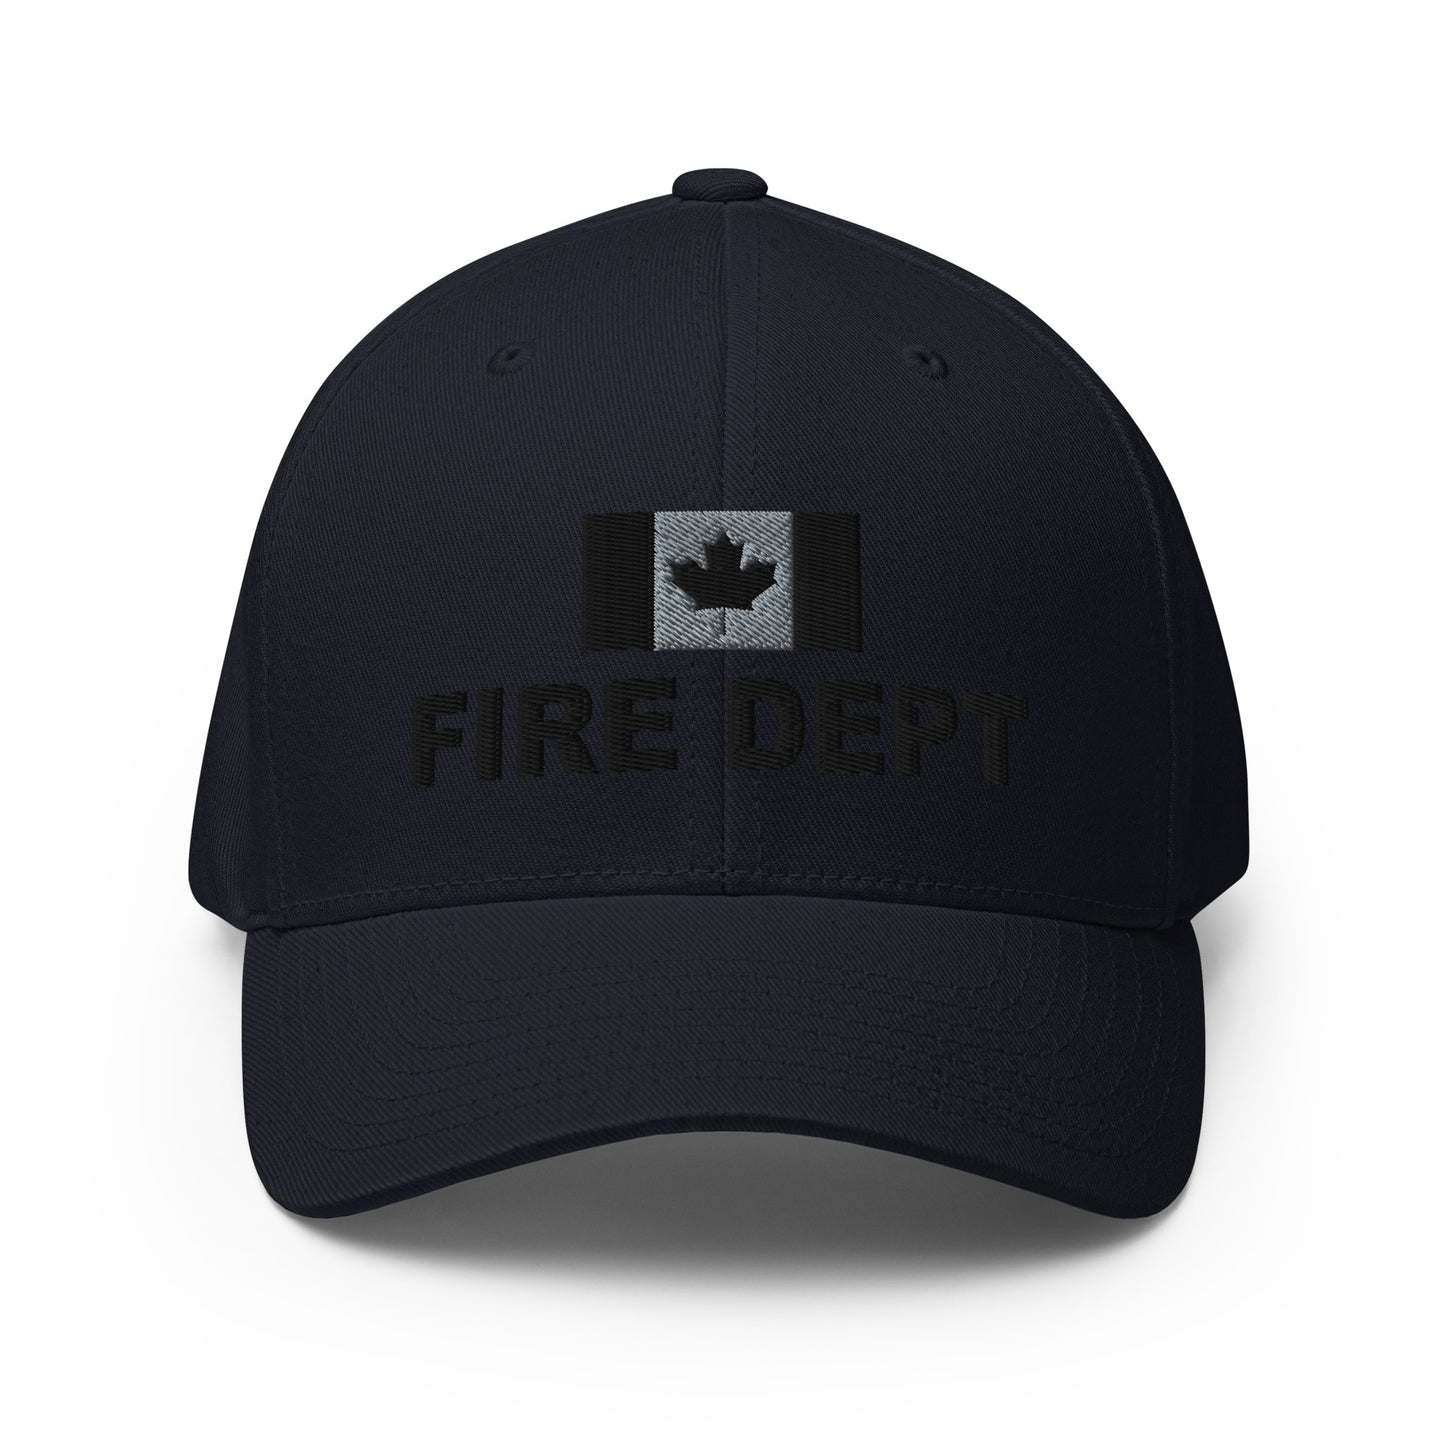 Canadian Fire Department Subdued Flexfit Hat-911 Duty Gear Canada-911 Duty Gear Canada